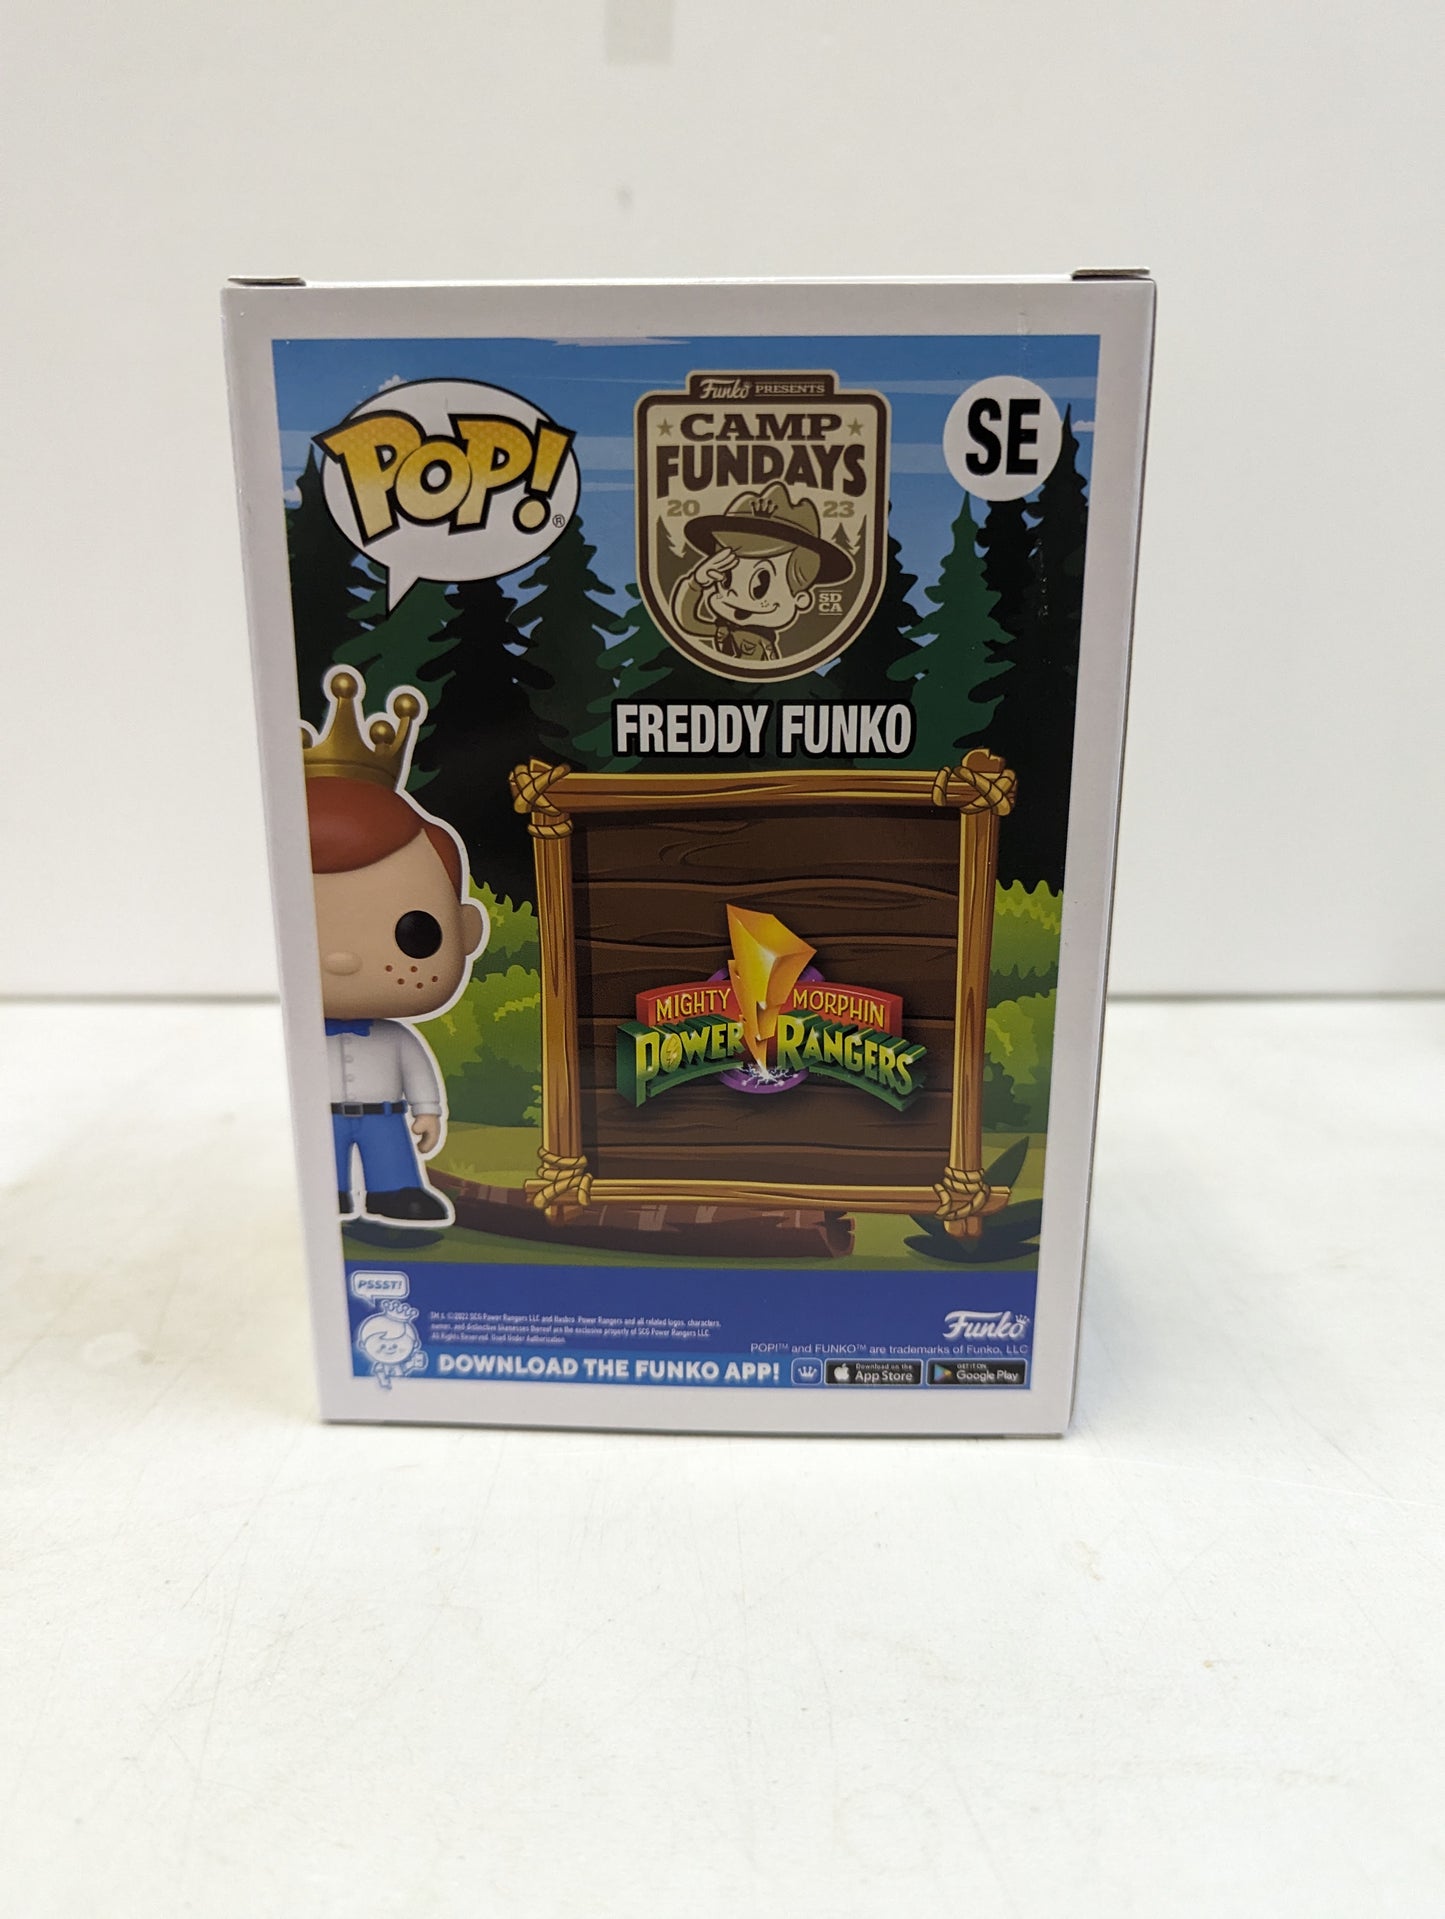 Freddy Funko as Green Ranger Camp Fundays 5000 pcs